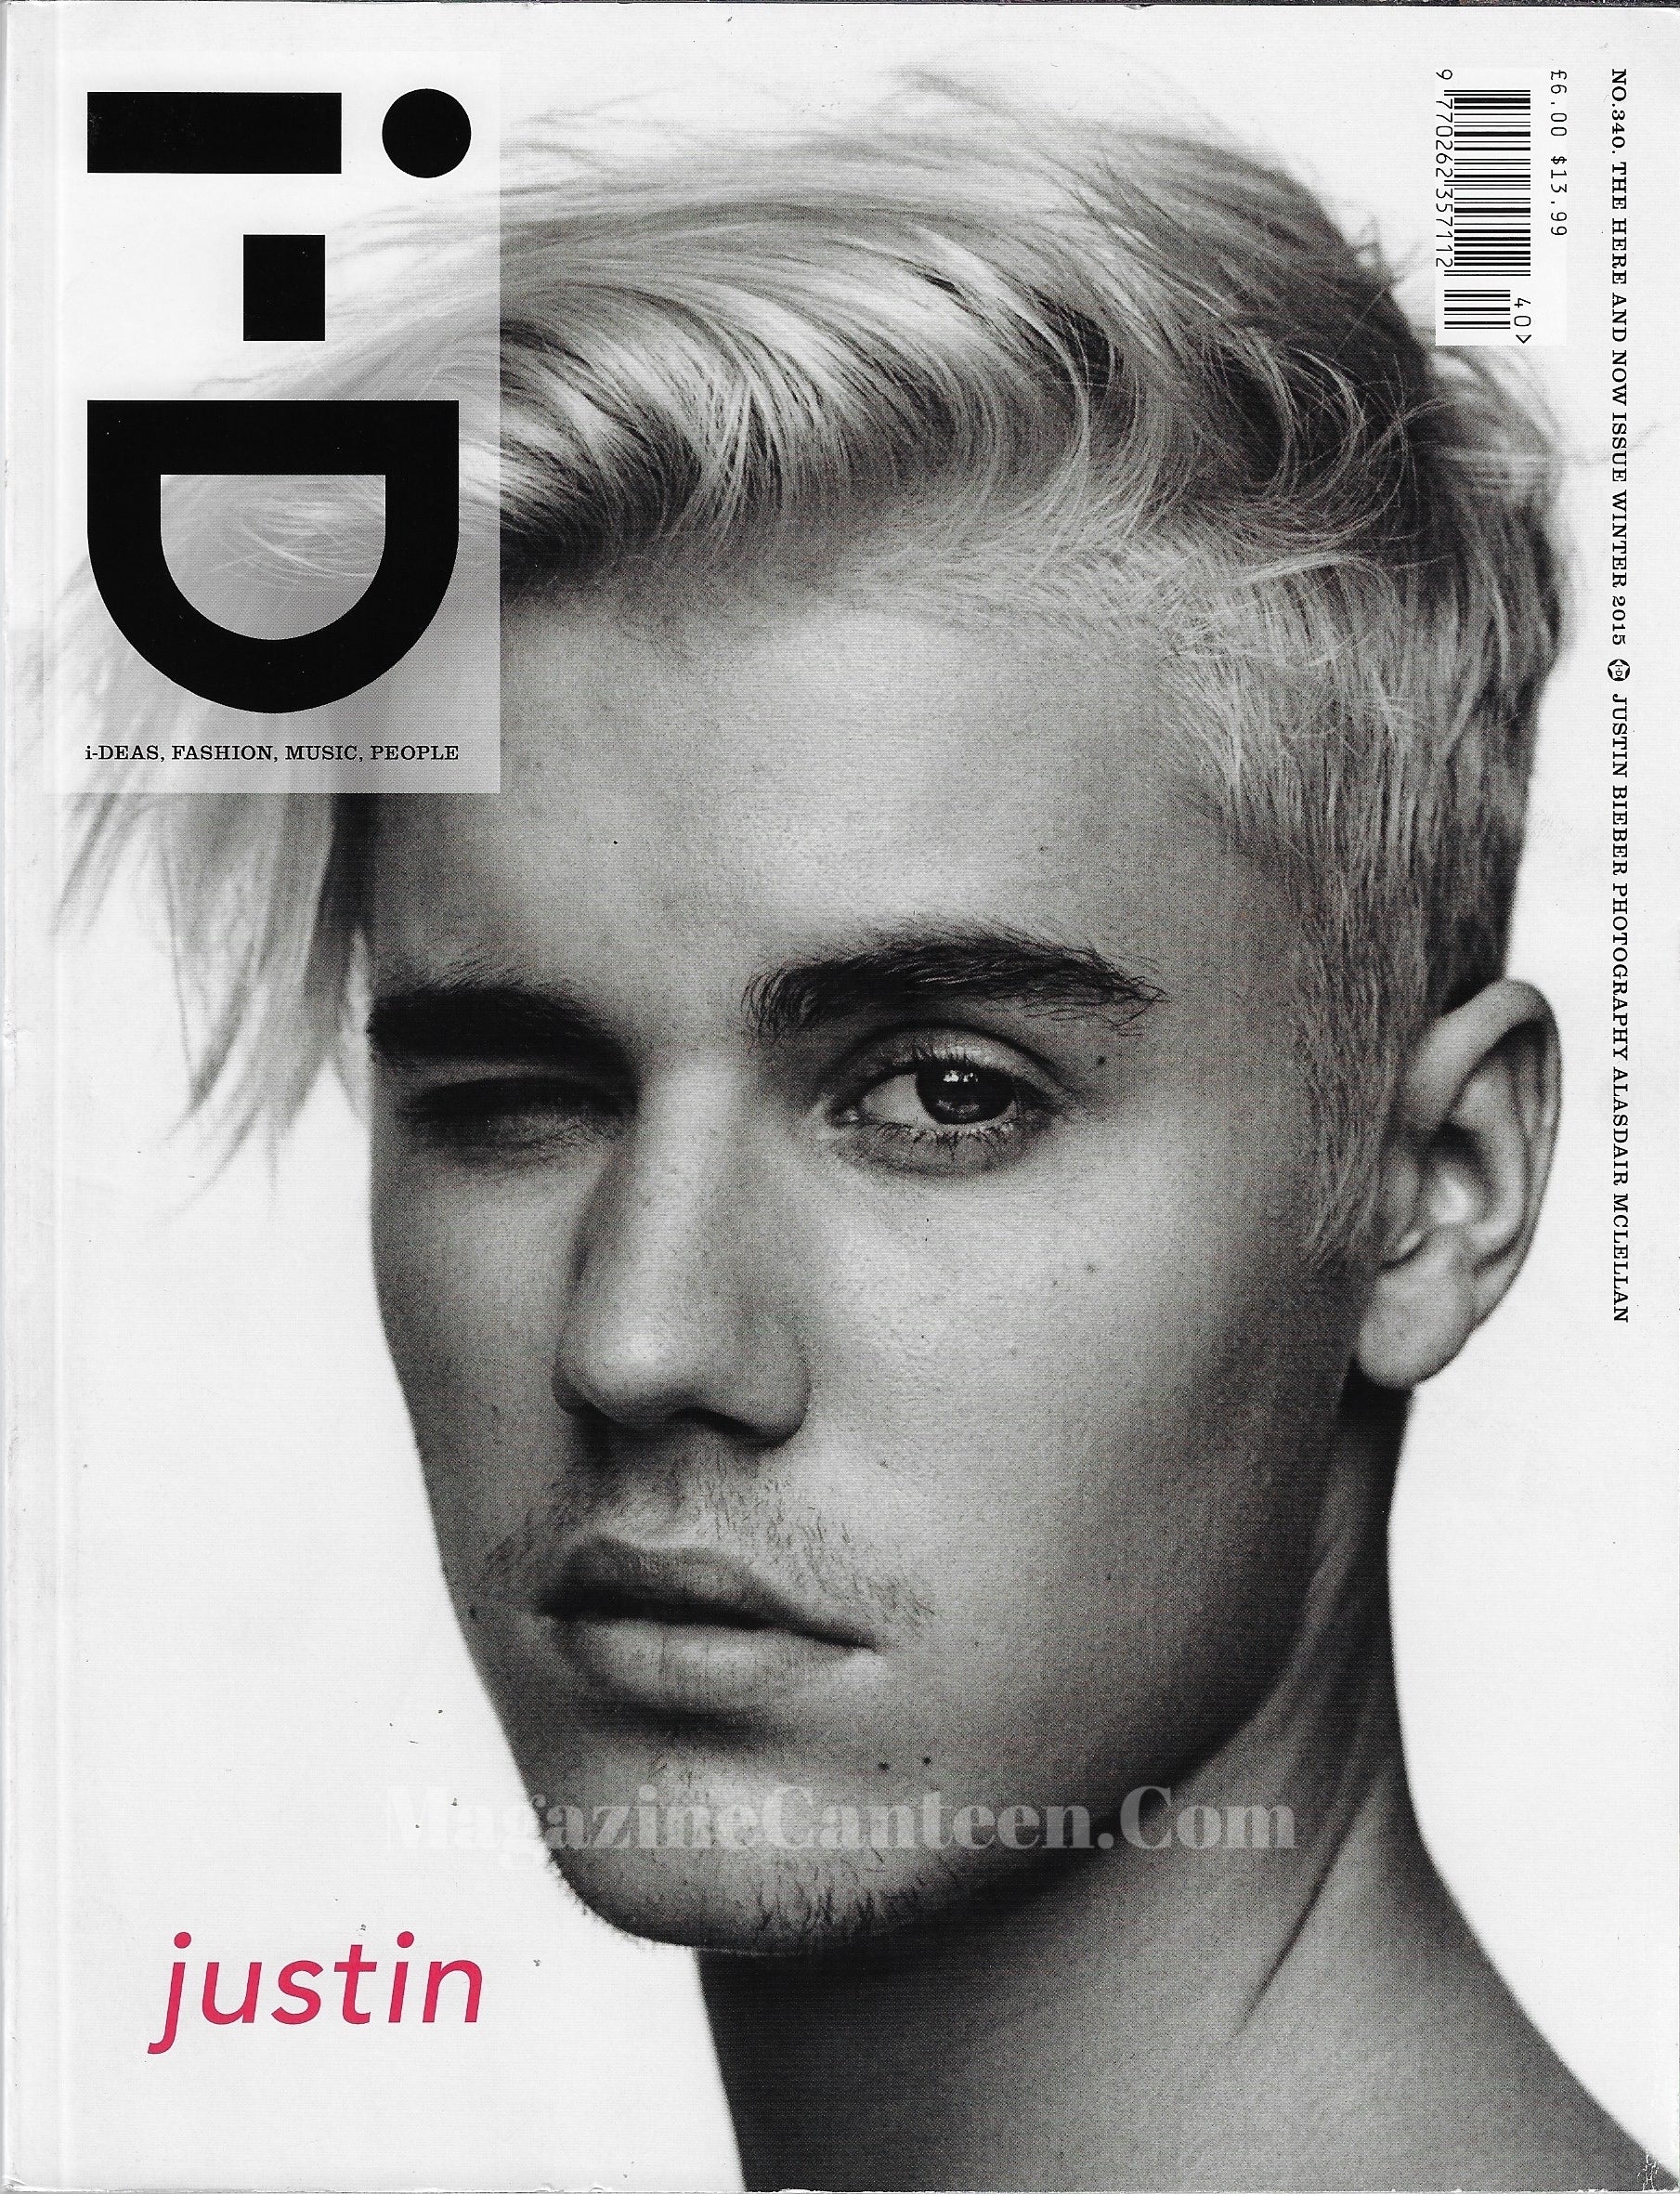 I-D Magazine 340 - Justin Bieber 2015